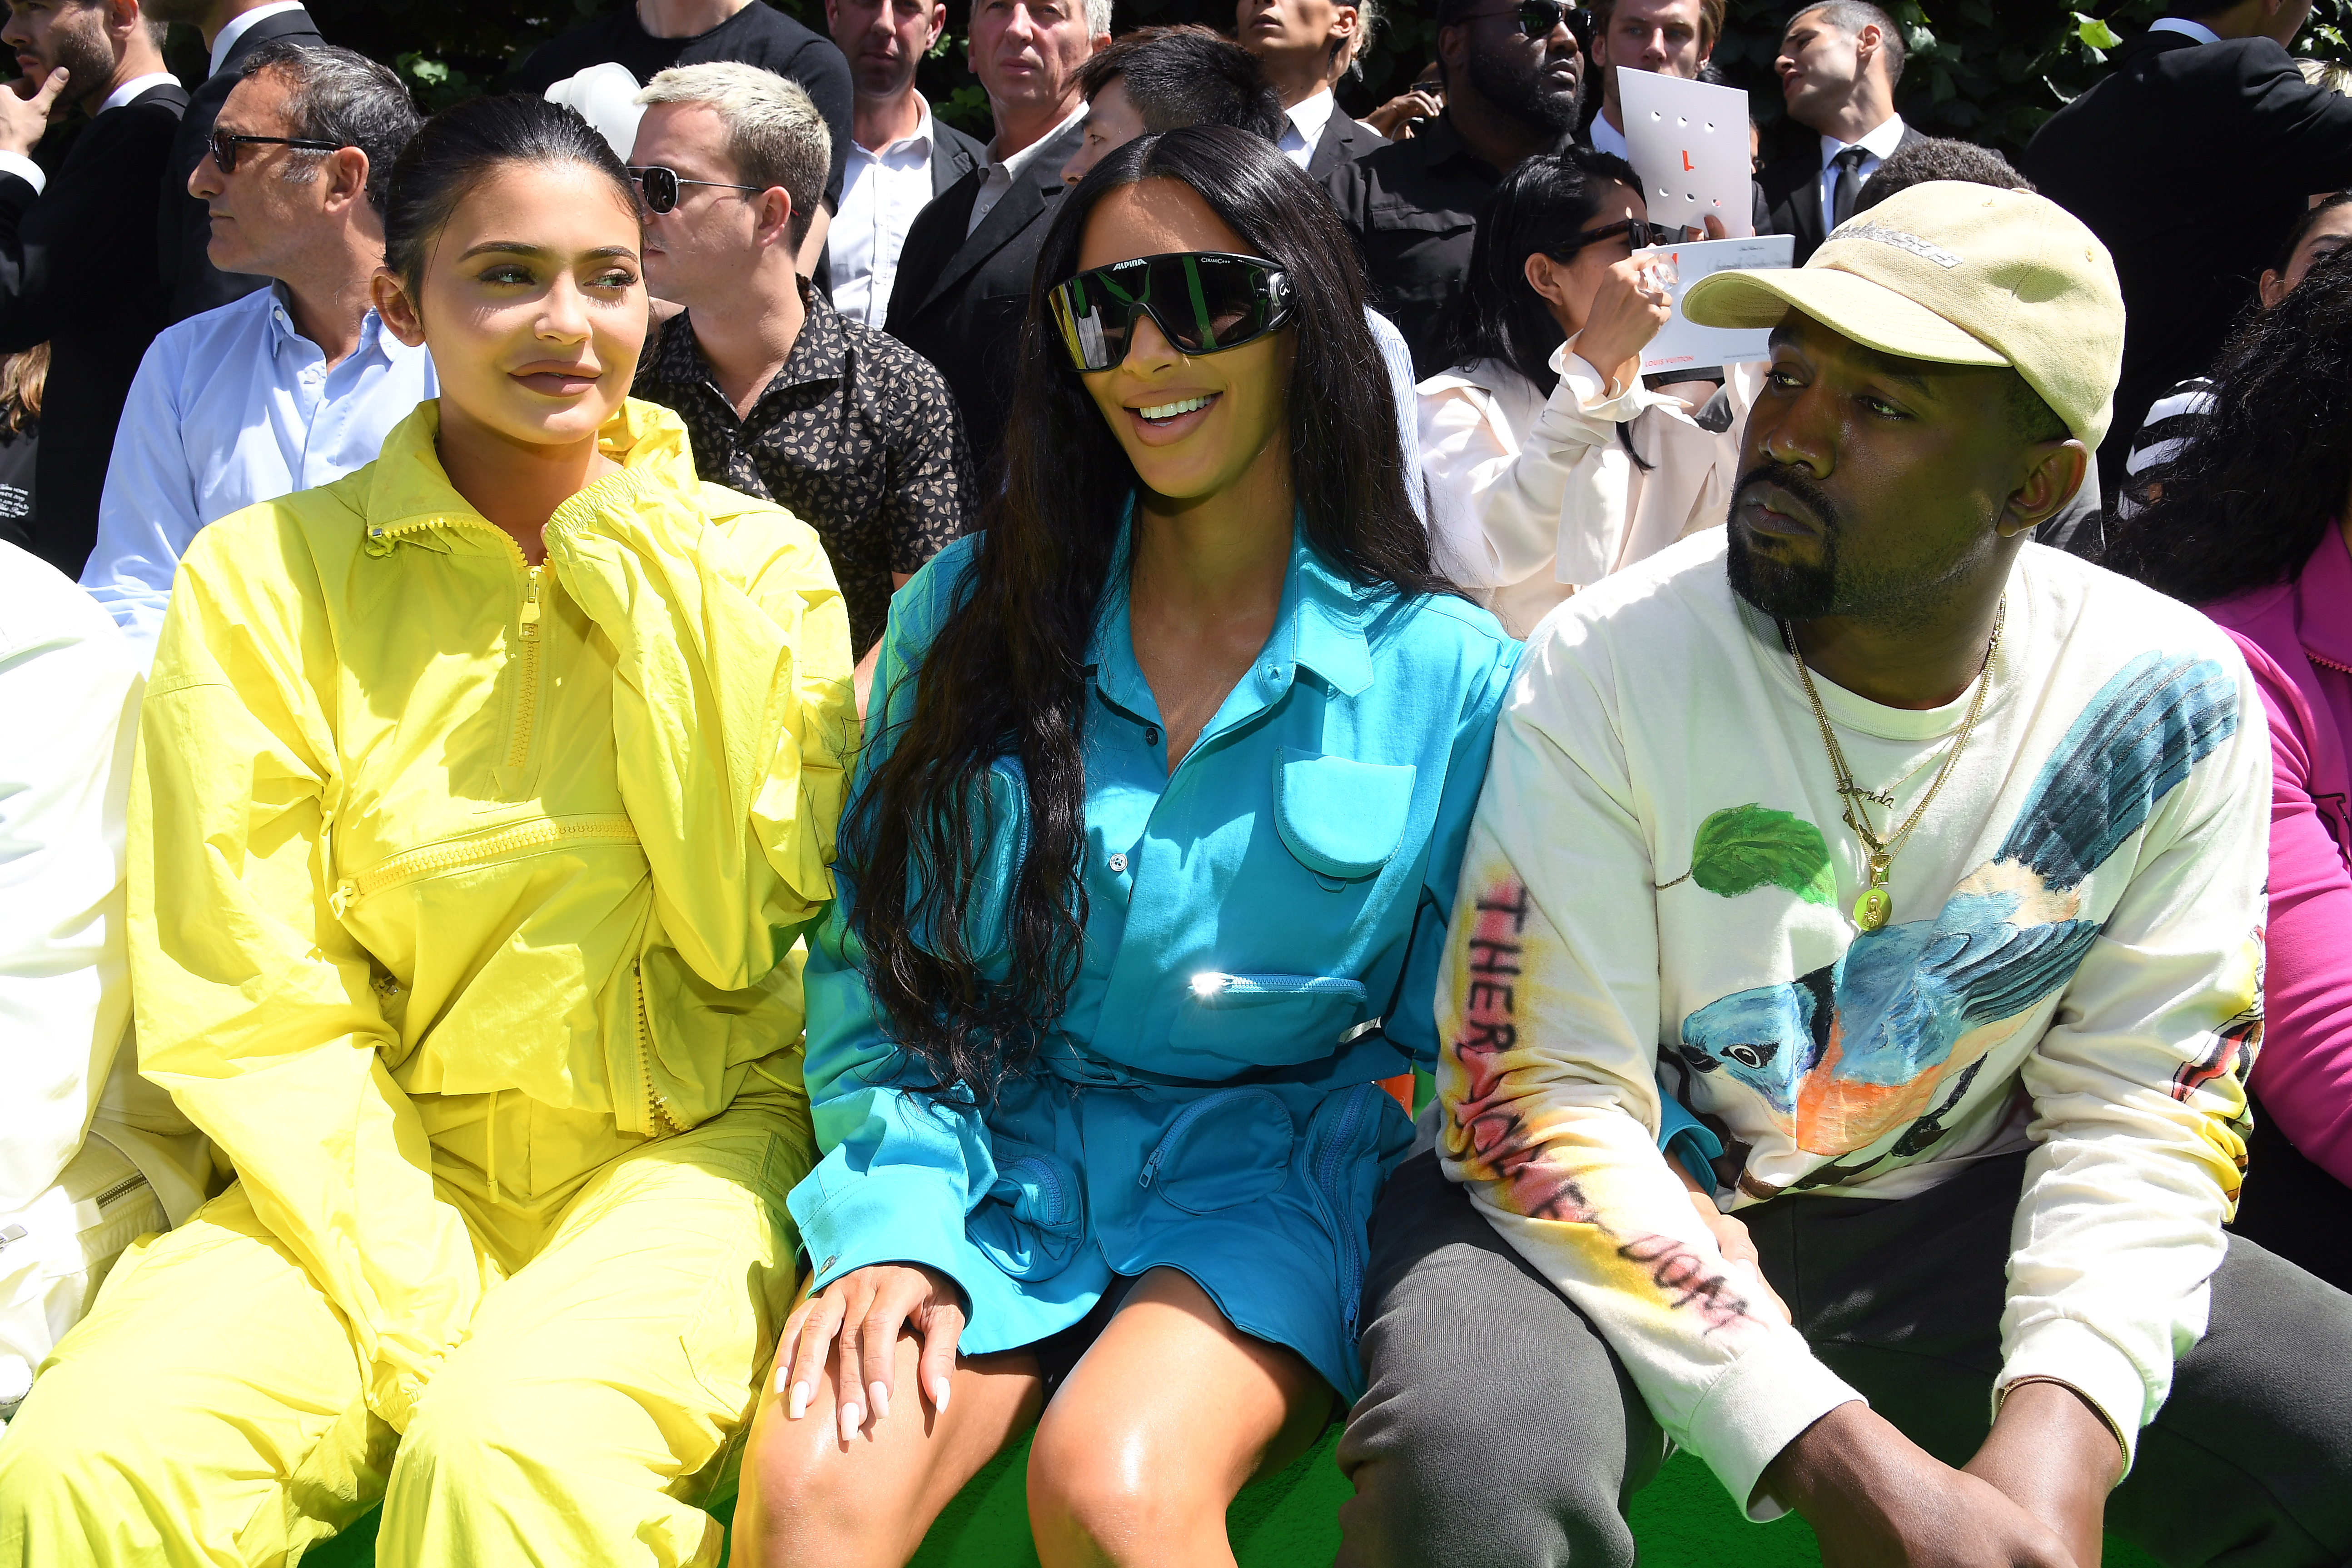 Kylie Jenner vestida de amarelo e Kim Kardashian de azul